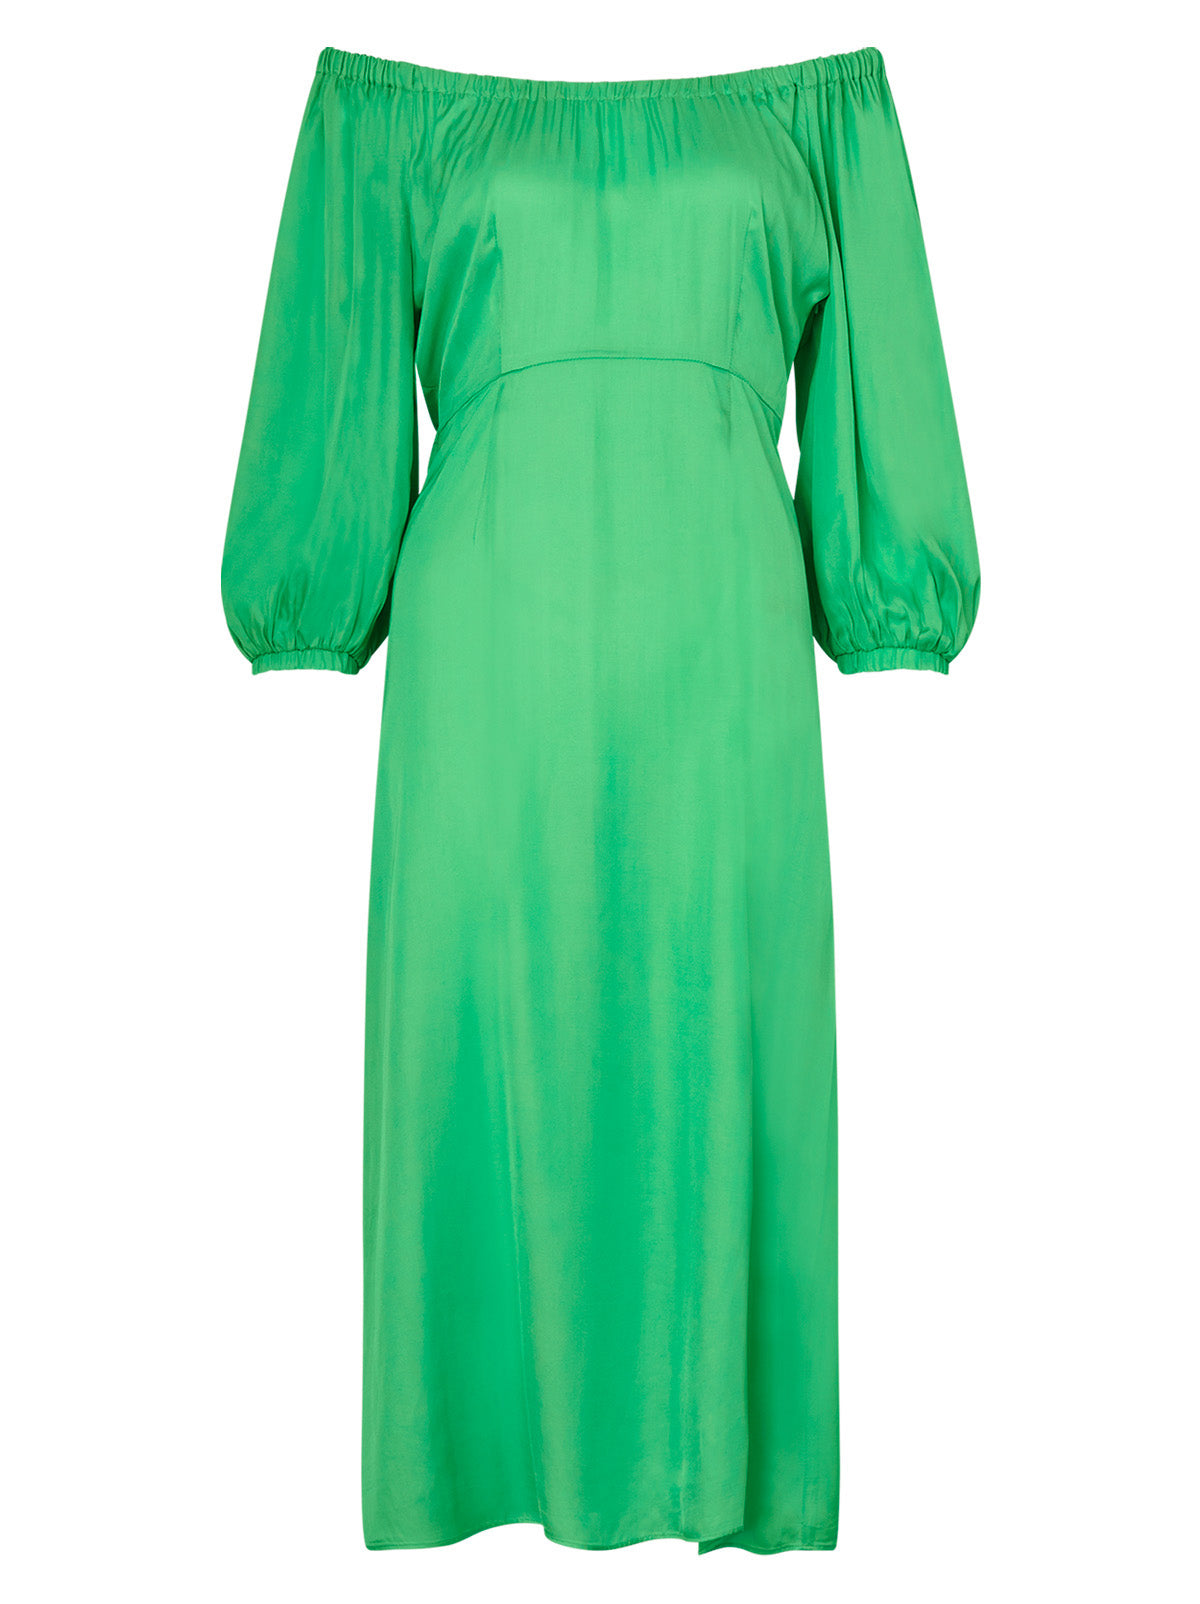 Della Apple Green Dress | KITRI Studio